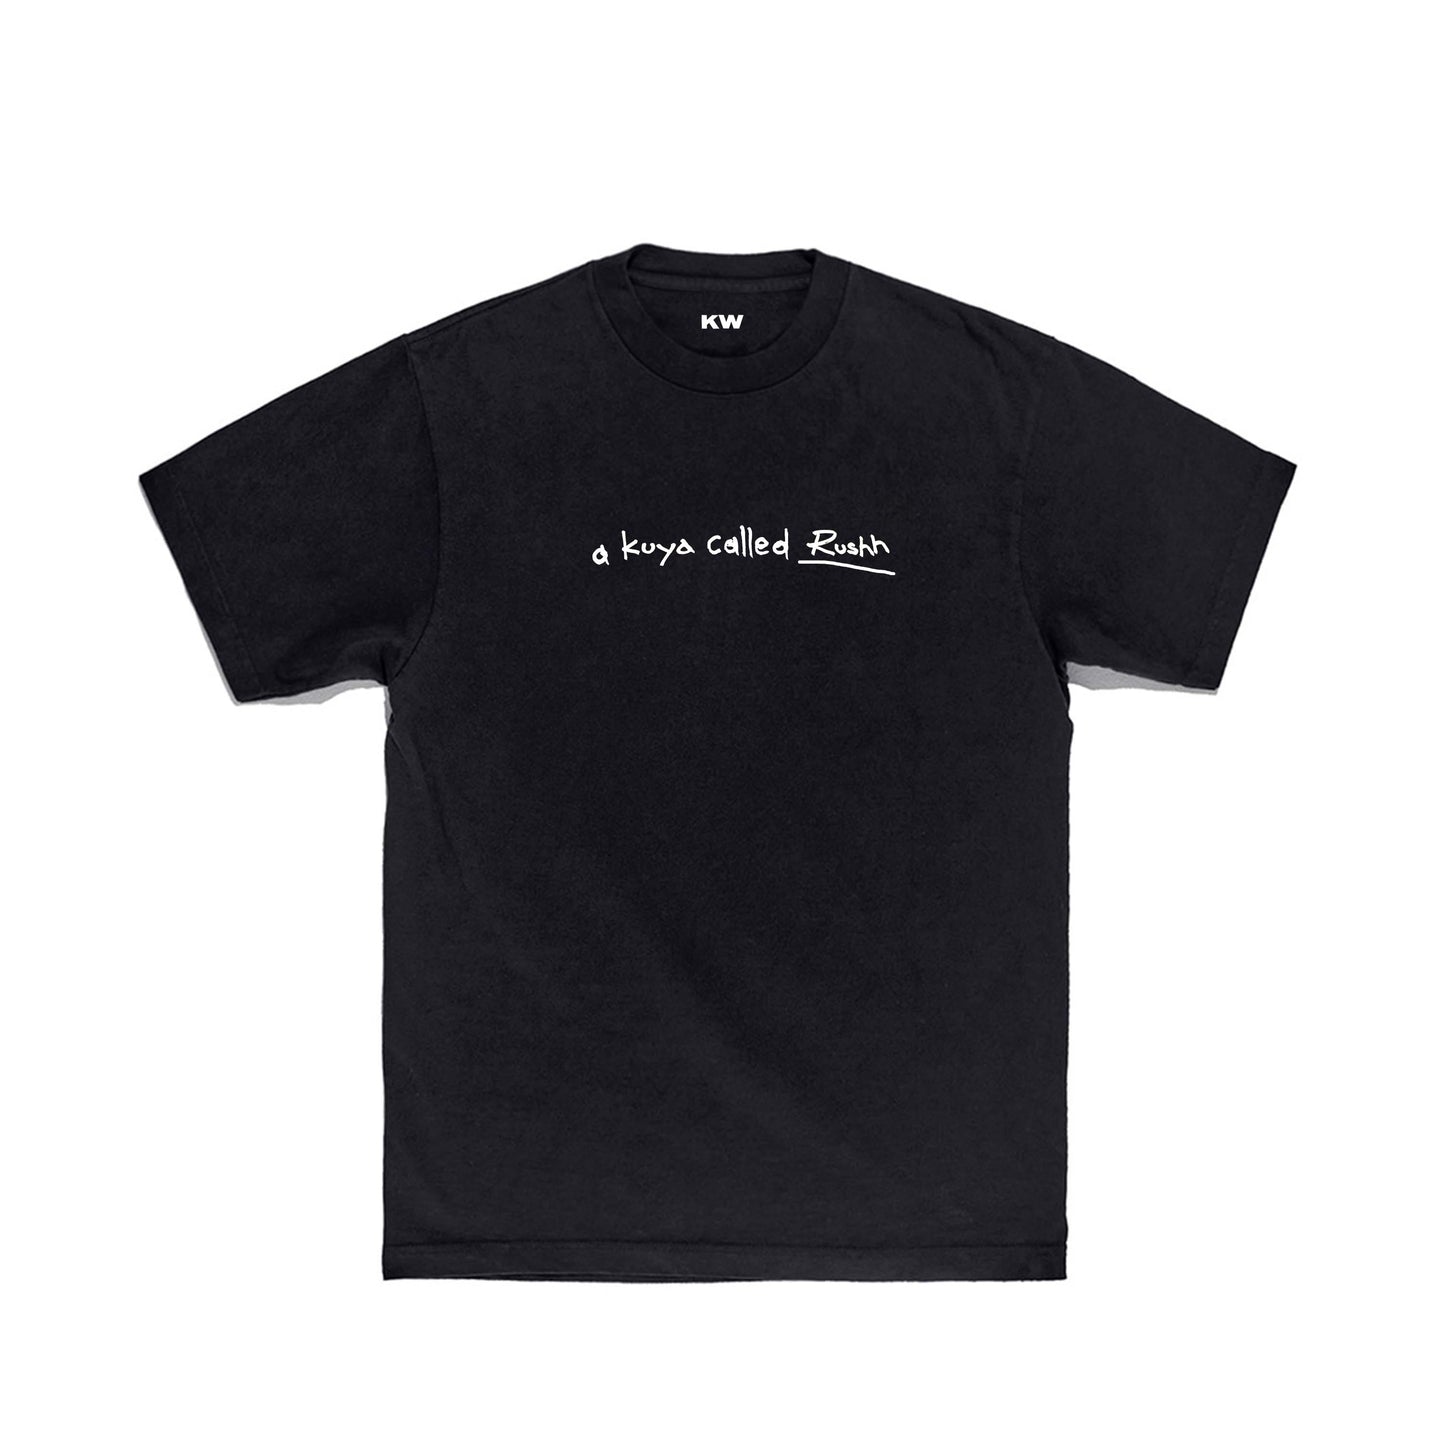 A Kuya Called _ T-Shirt (Black)